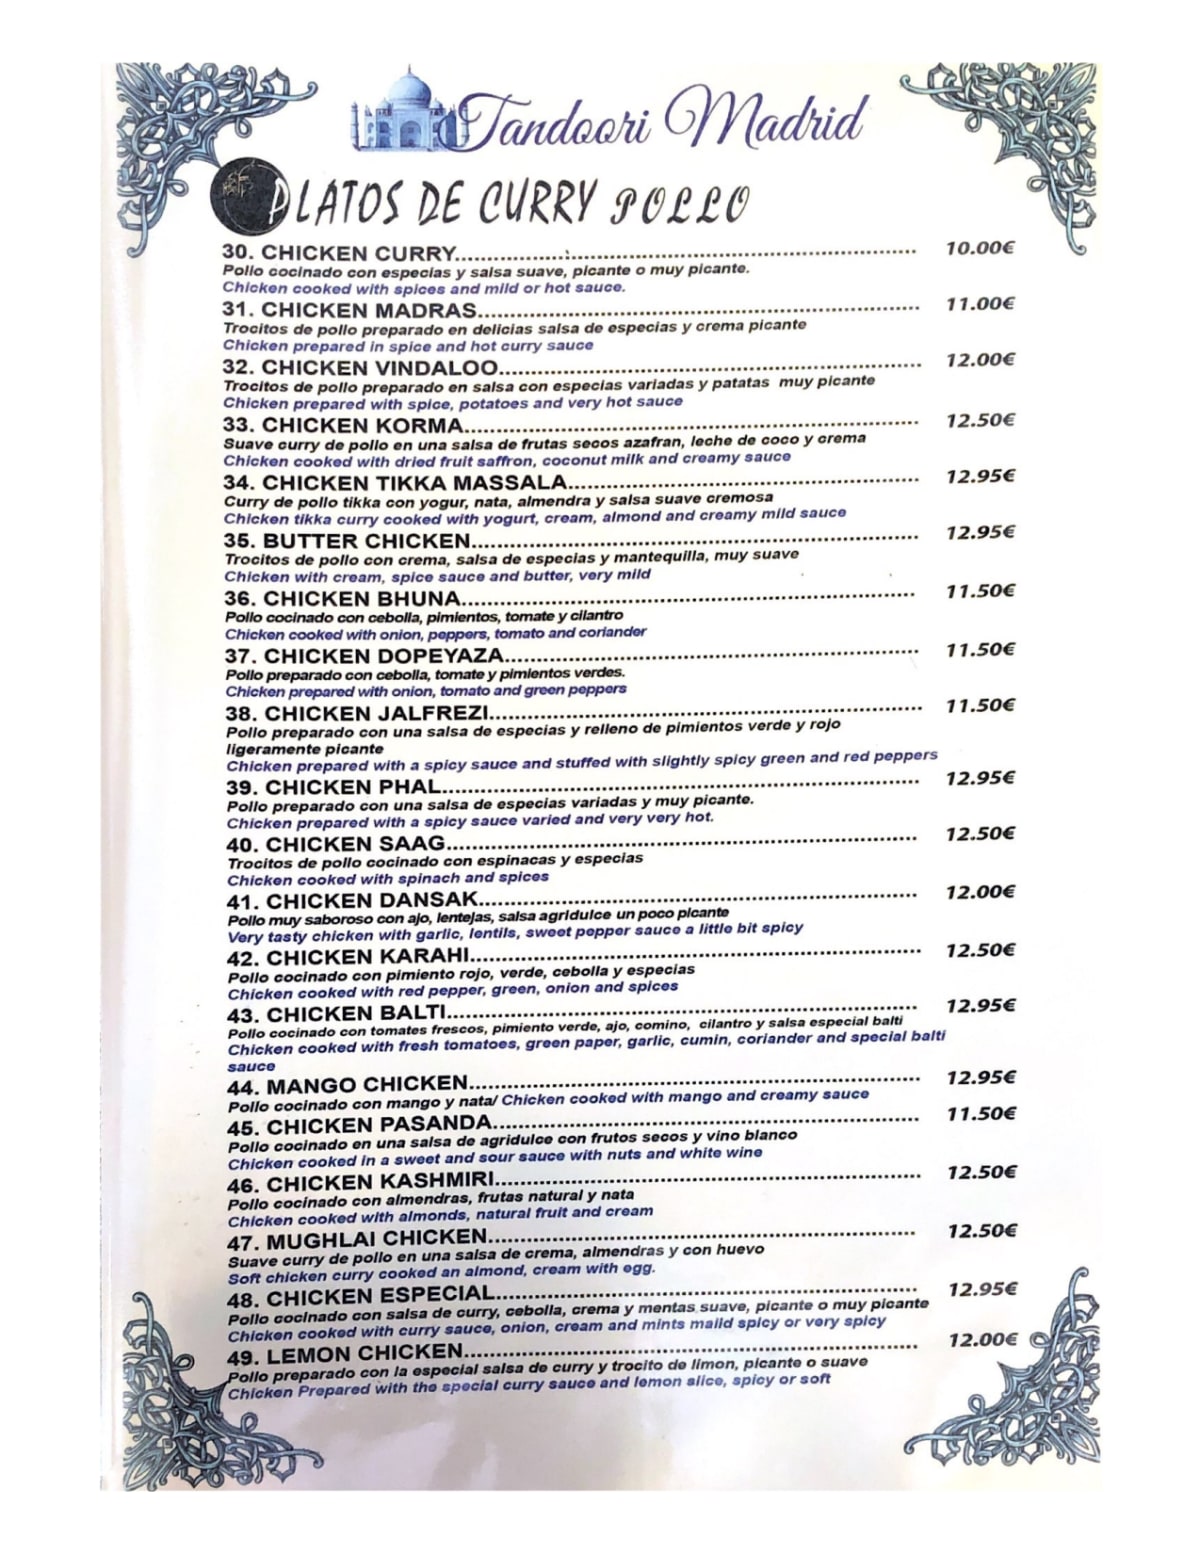 Tandoori Madrid menu